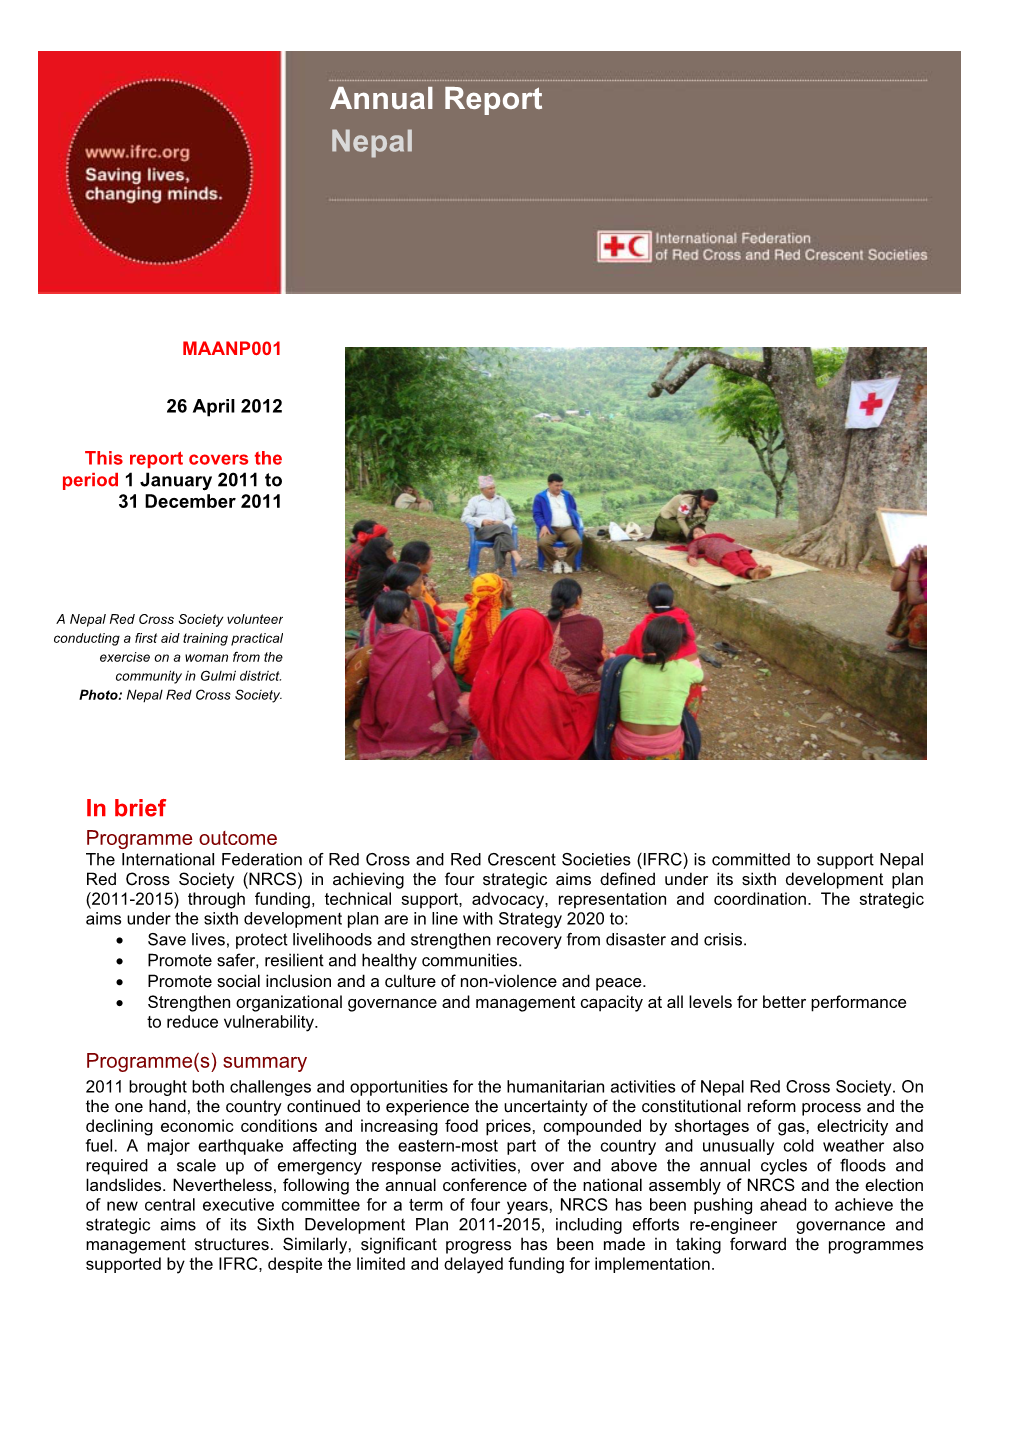 Annual Report Nepal